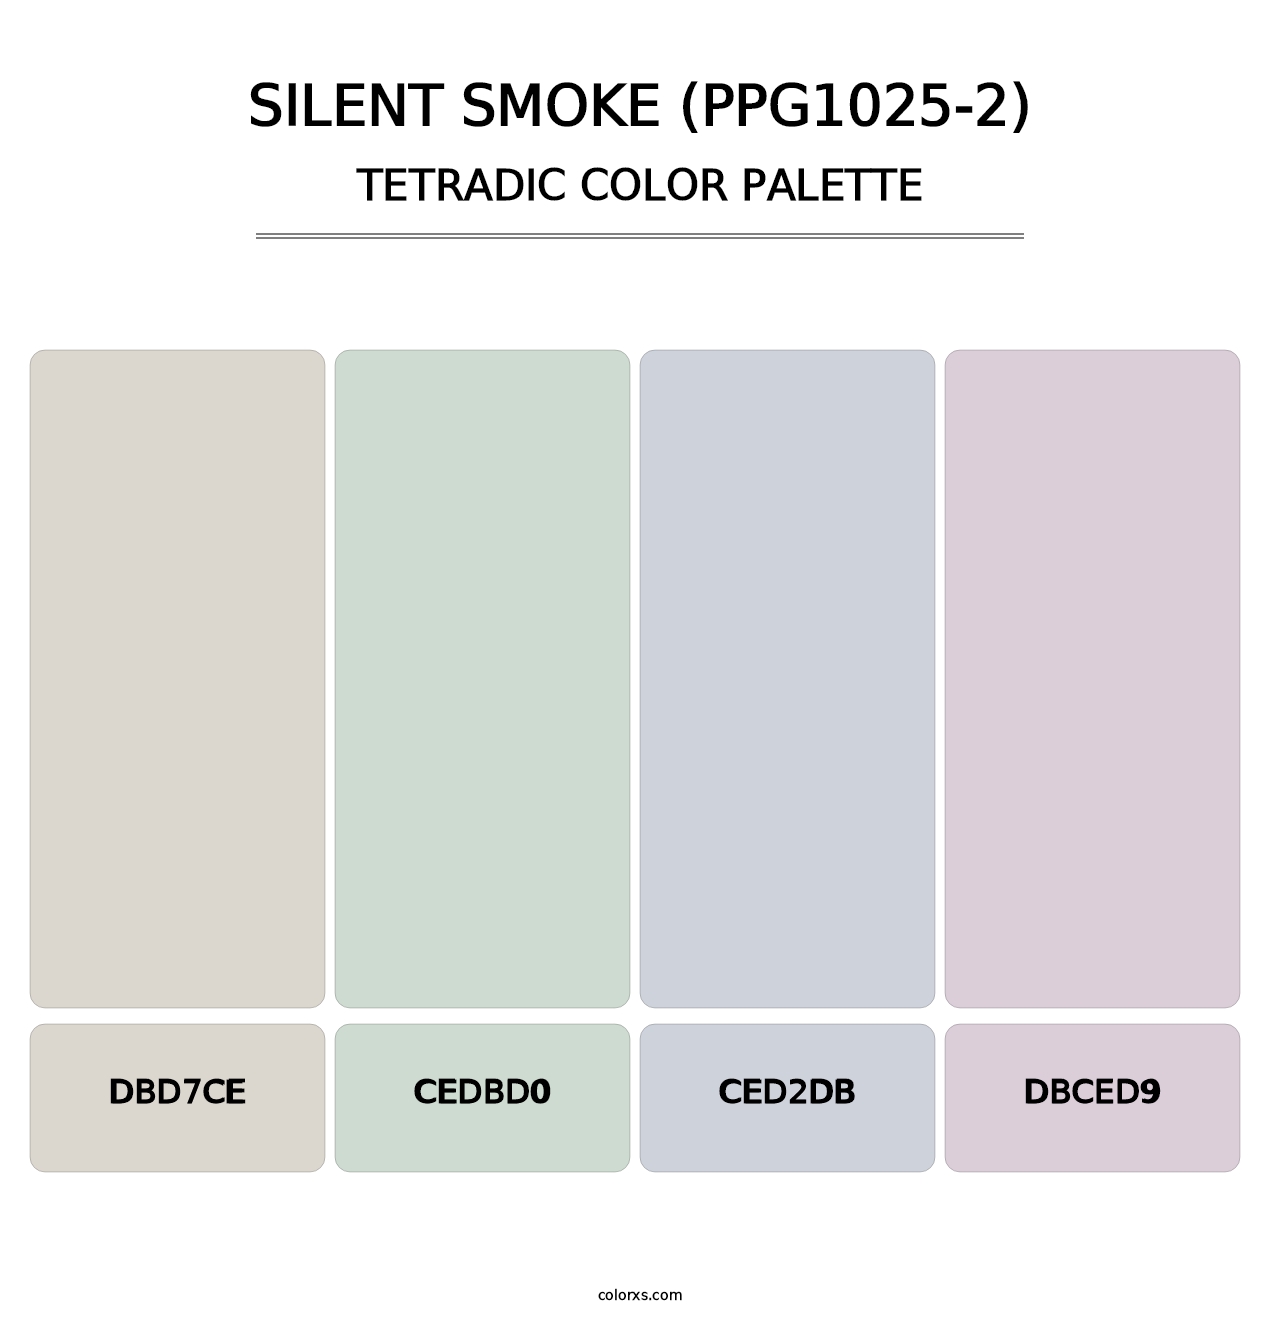 Silent Smoke (PPG1025-2) - Tetradic Color Palette